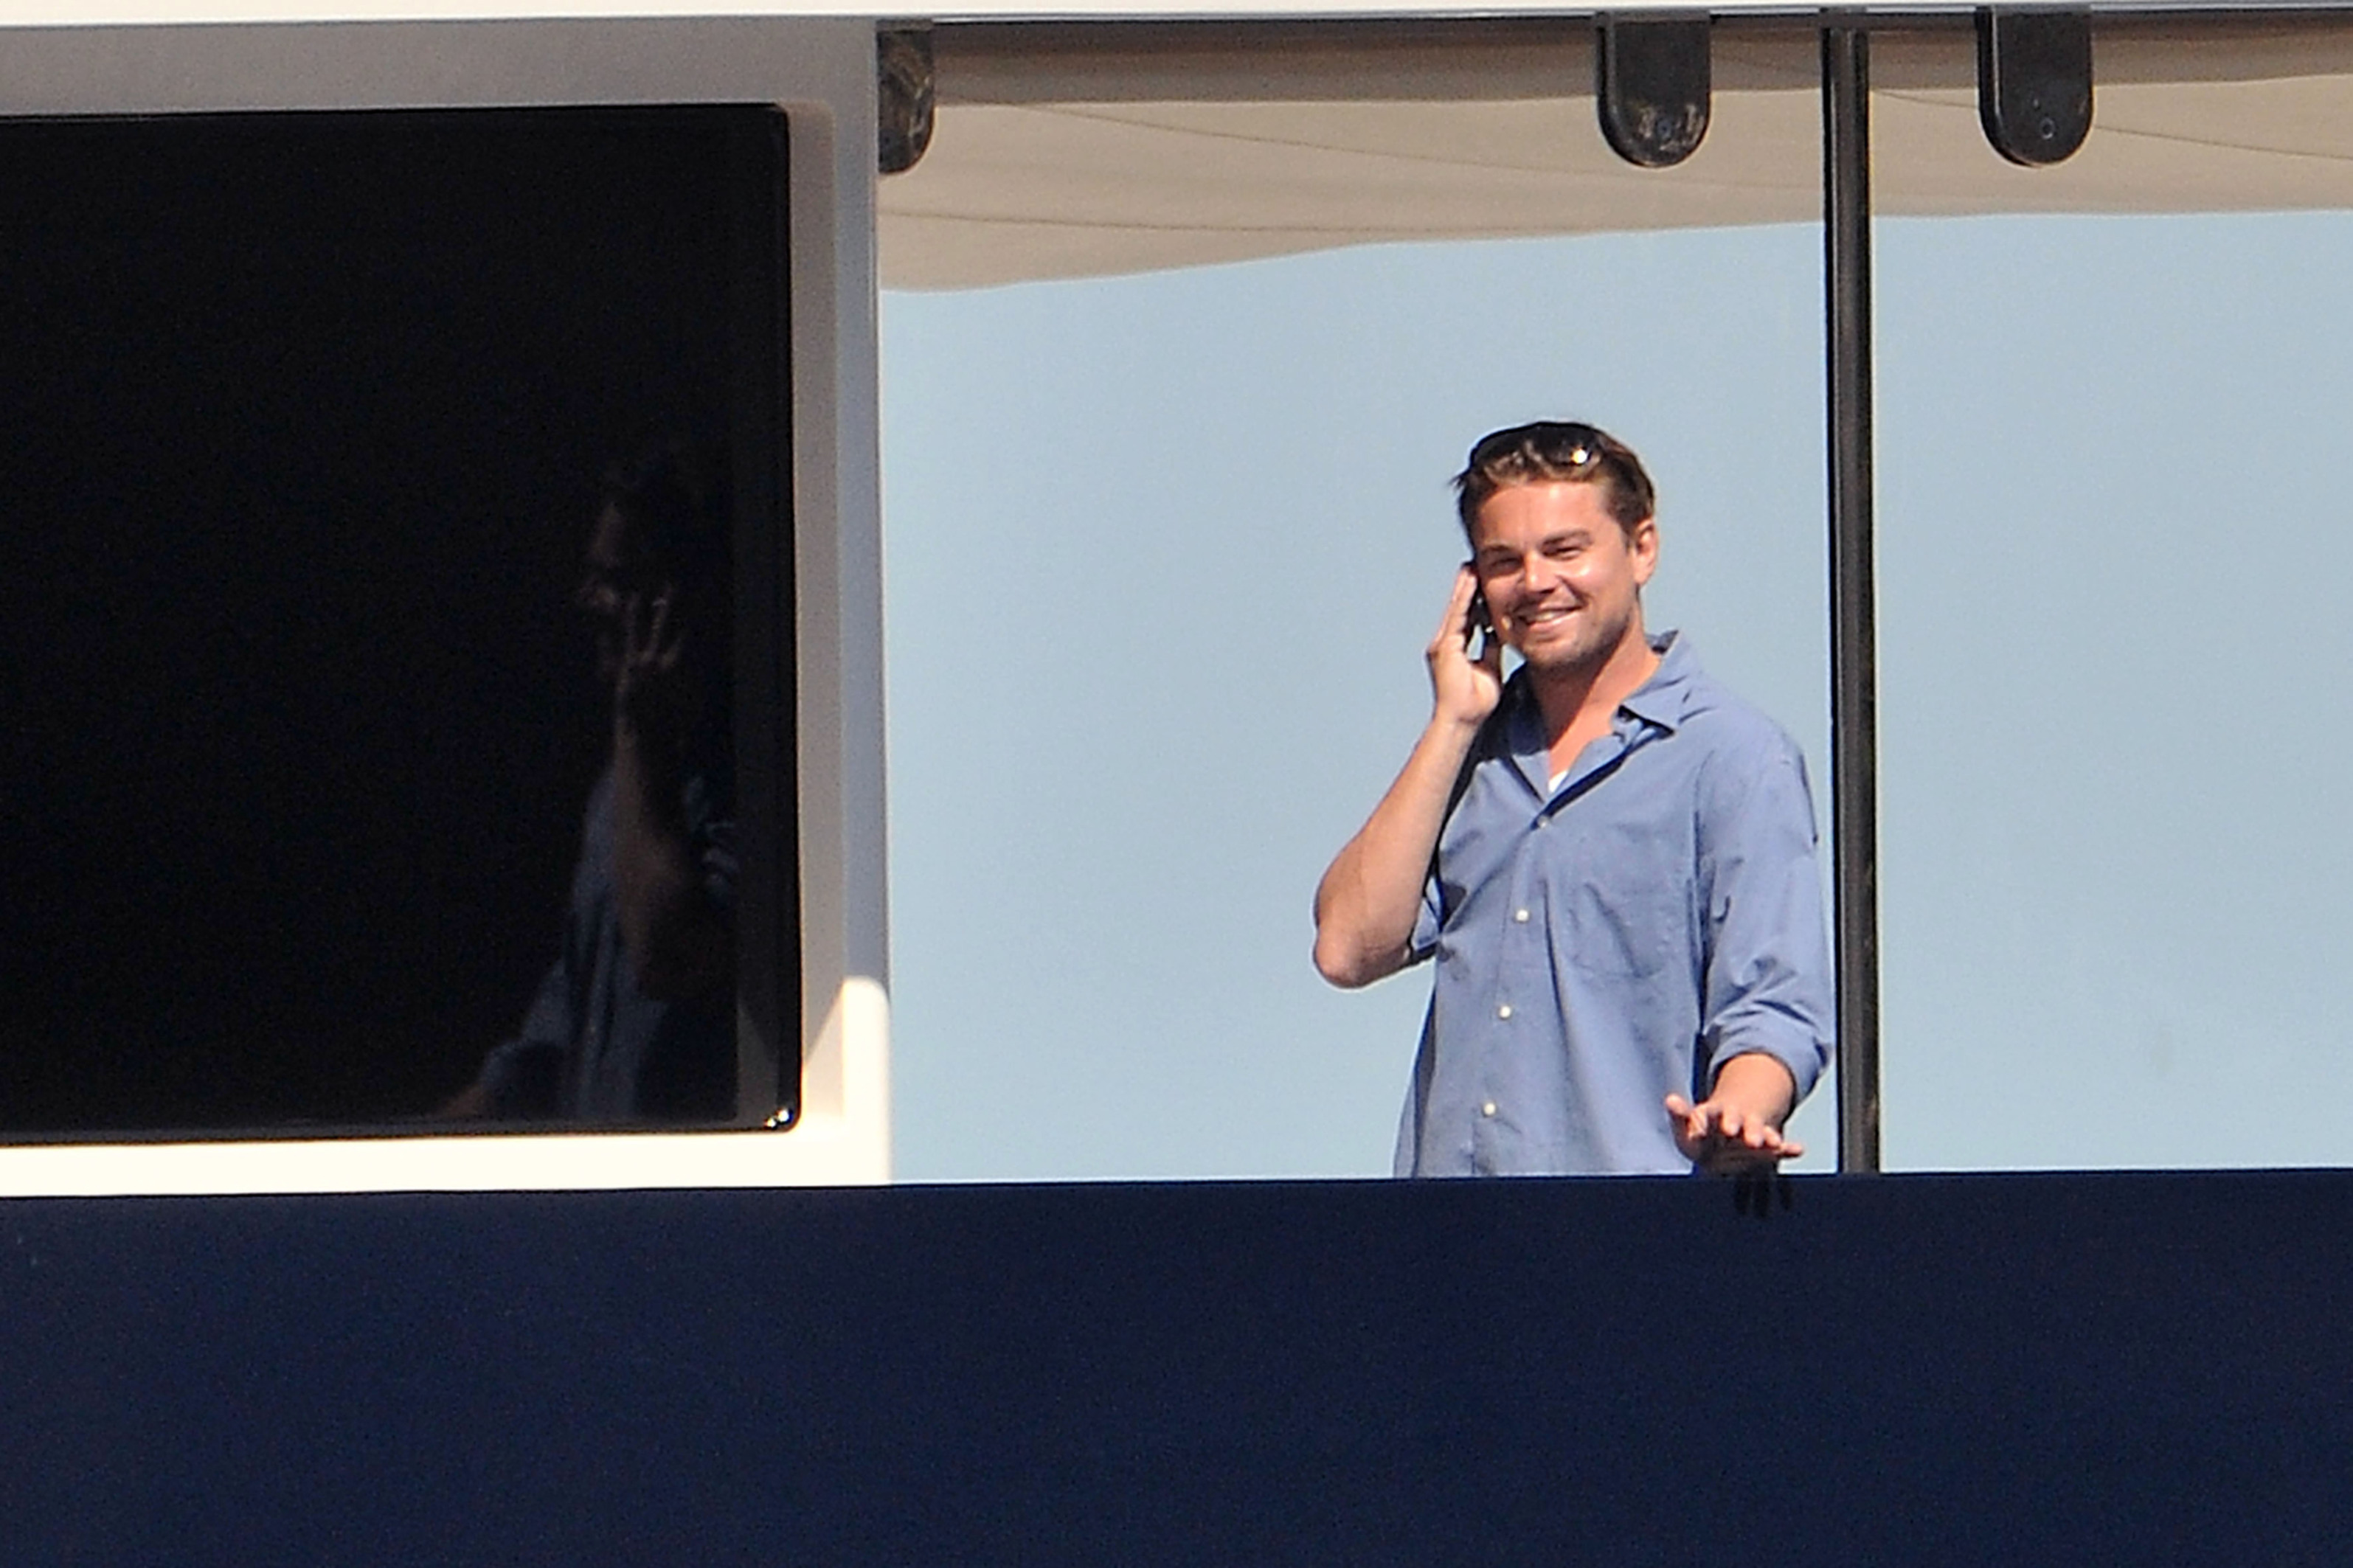 Yacht, Leonardo DiCaprio, Steven Spielberg, Blake Lively